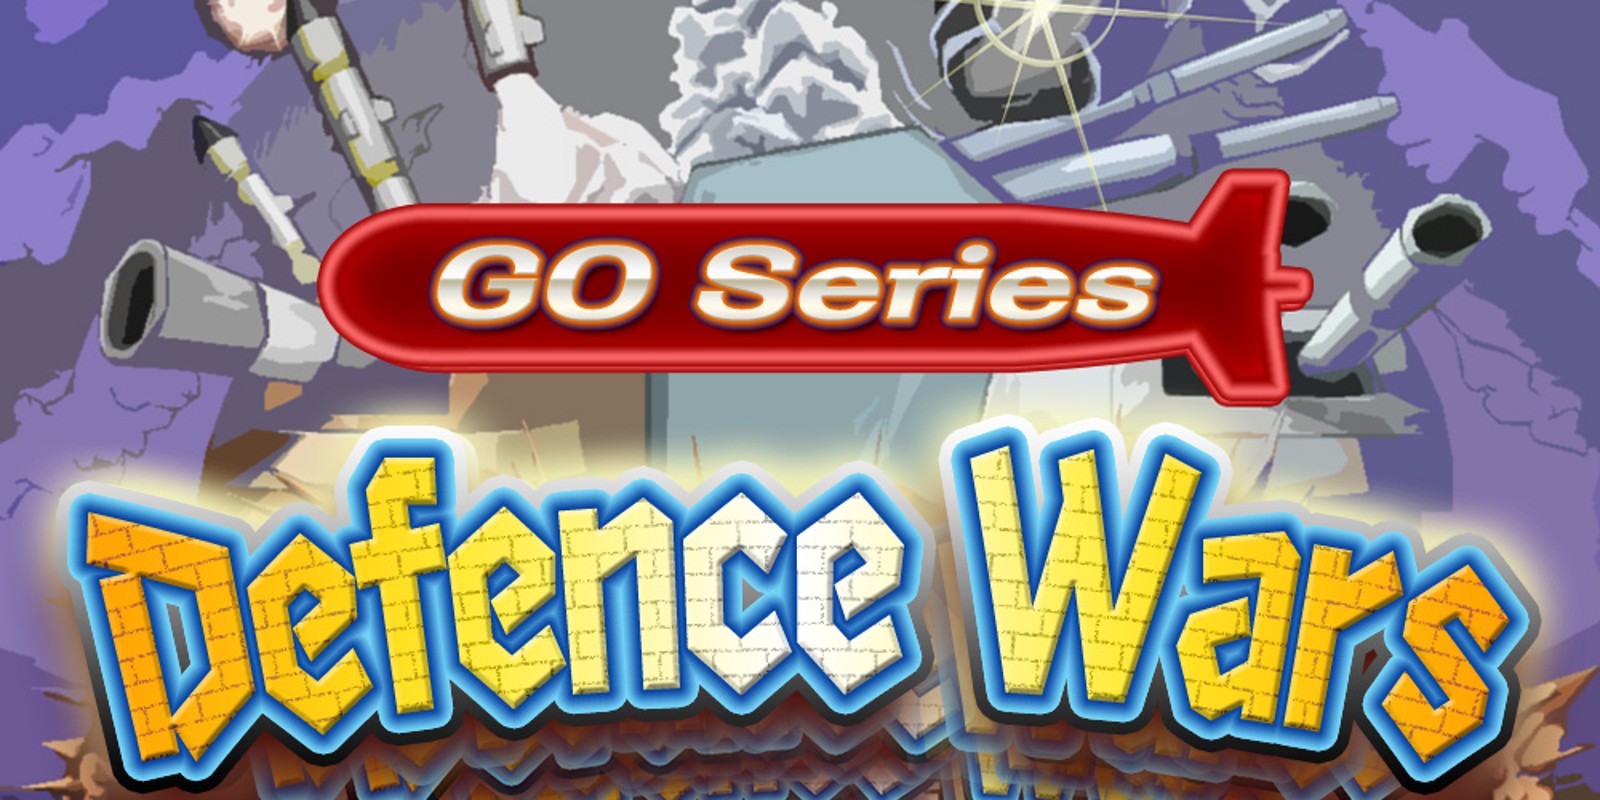 GO Series Defence Wars